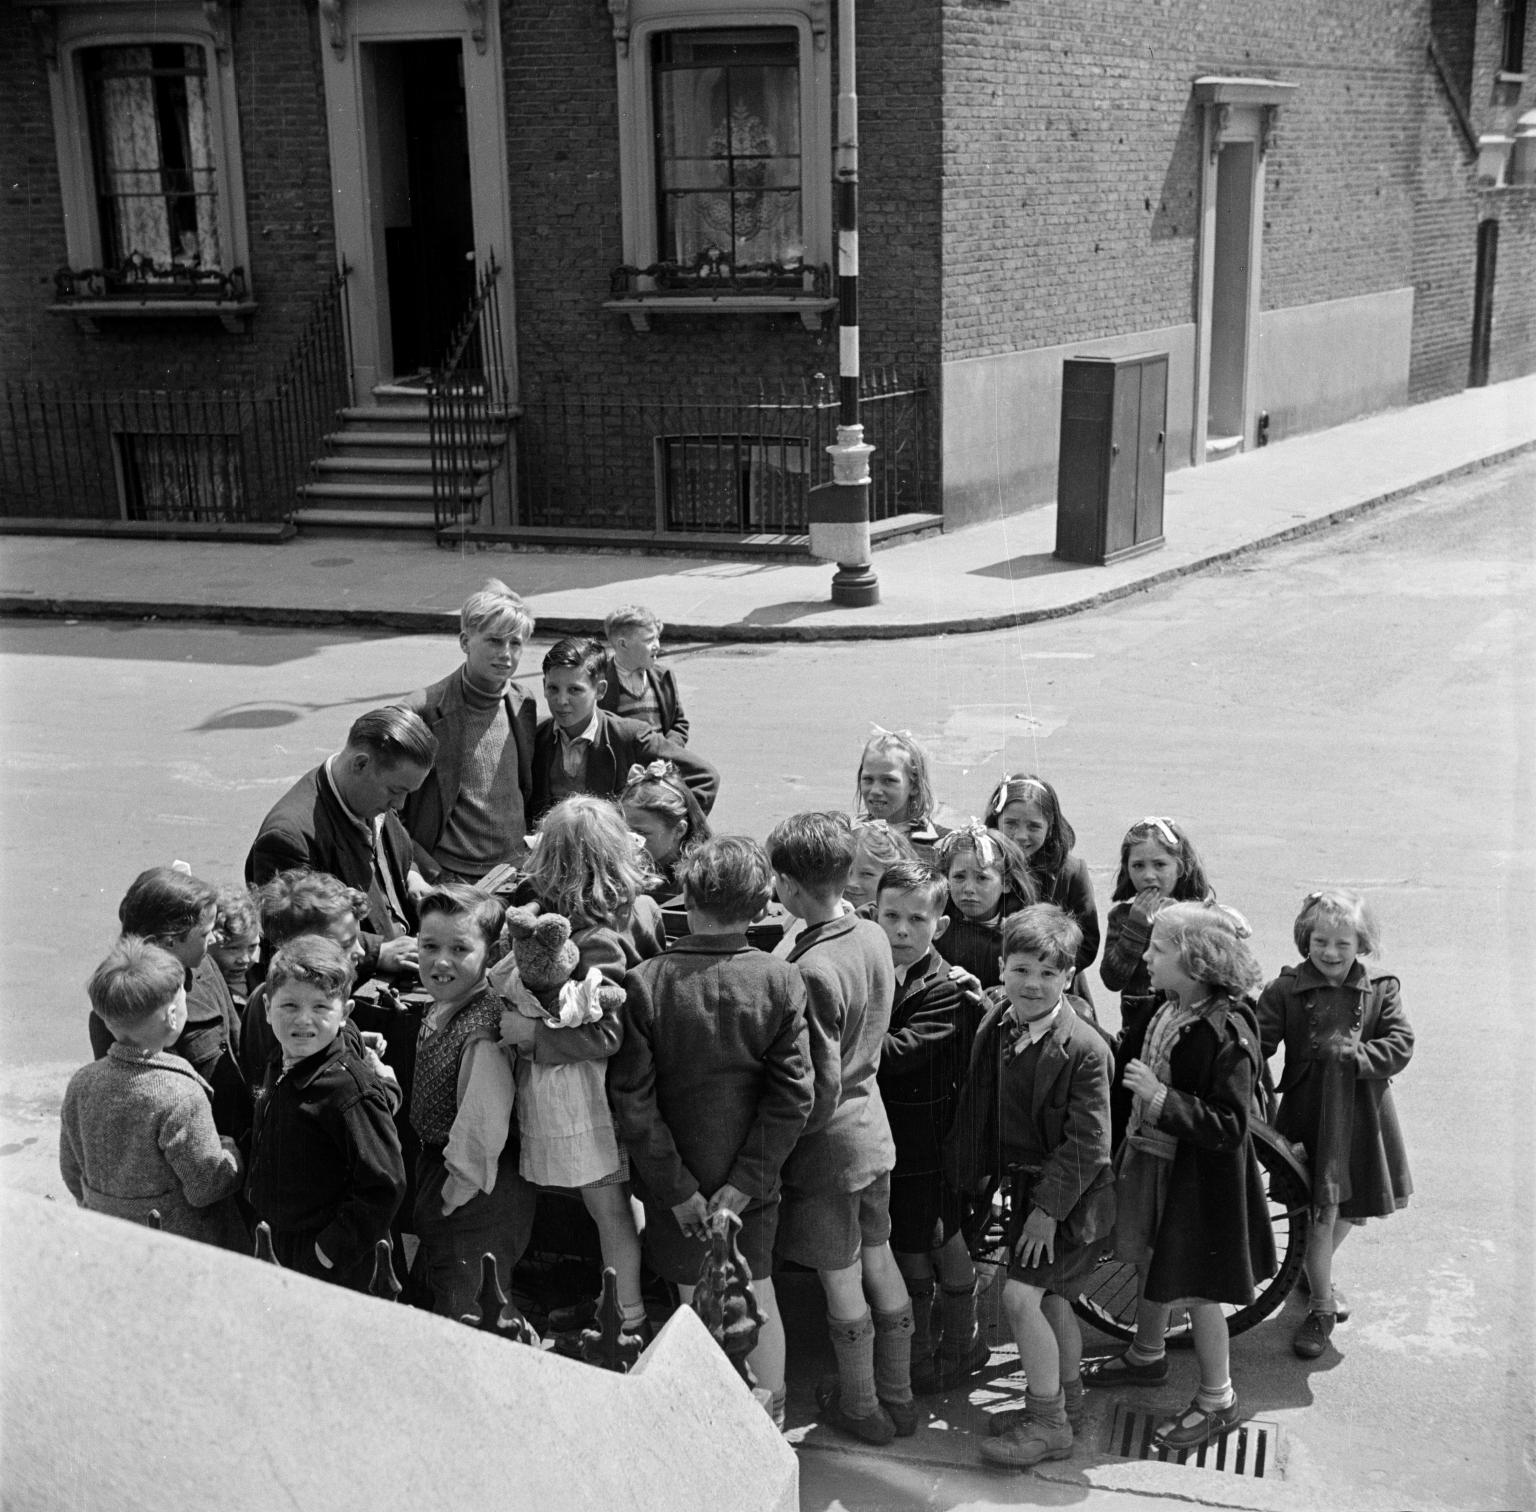 Re-colectar vestigios José del Carmen Palacios Aguilar nigel henderson_photo showing a crow of children in the street_c1949-1956